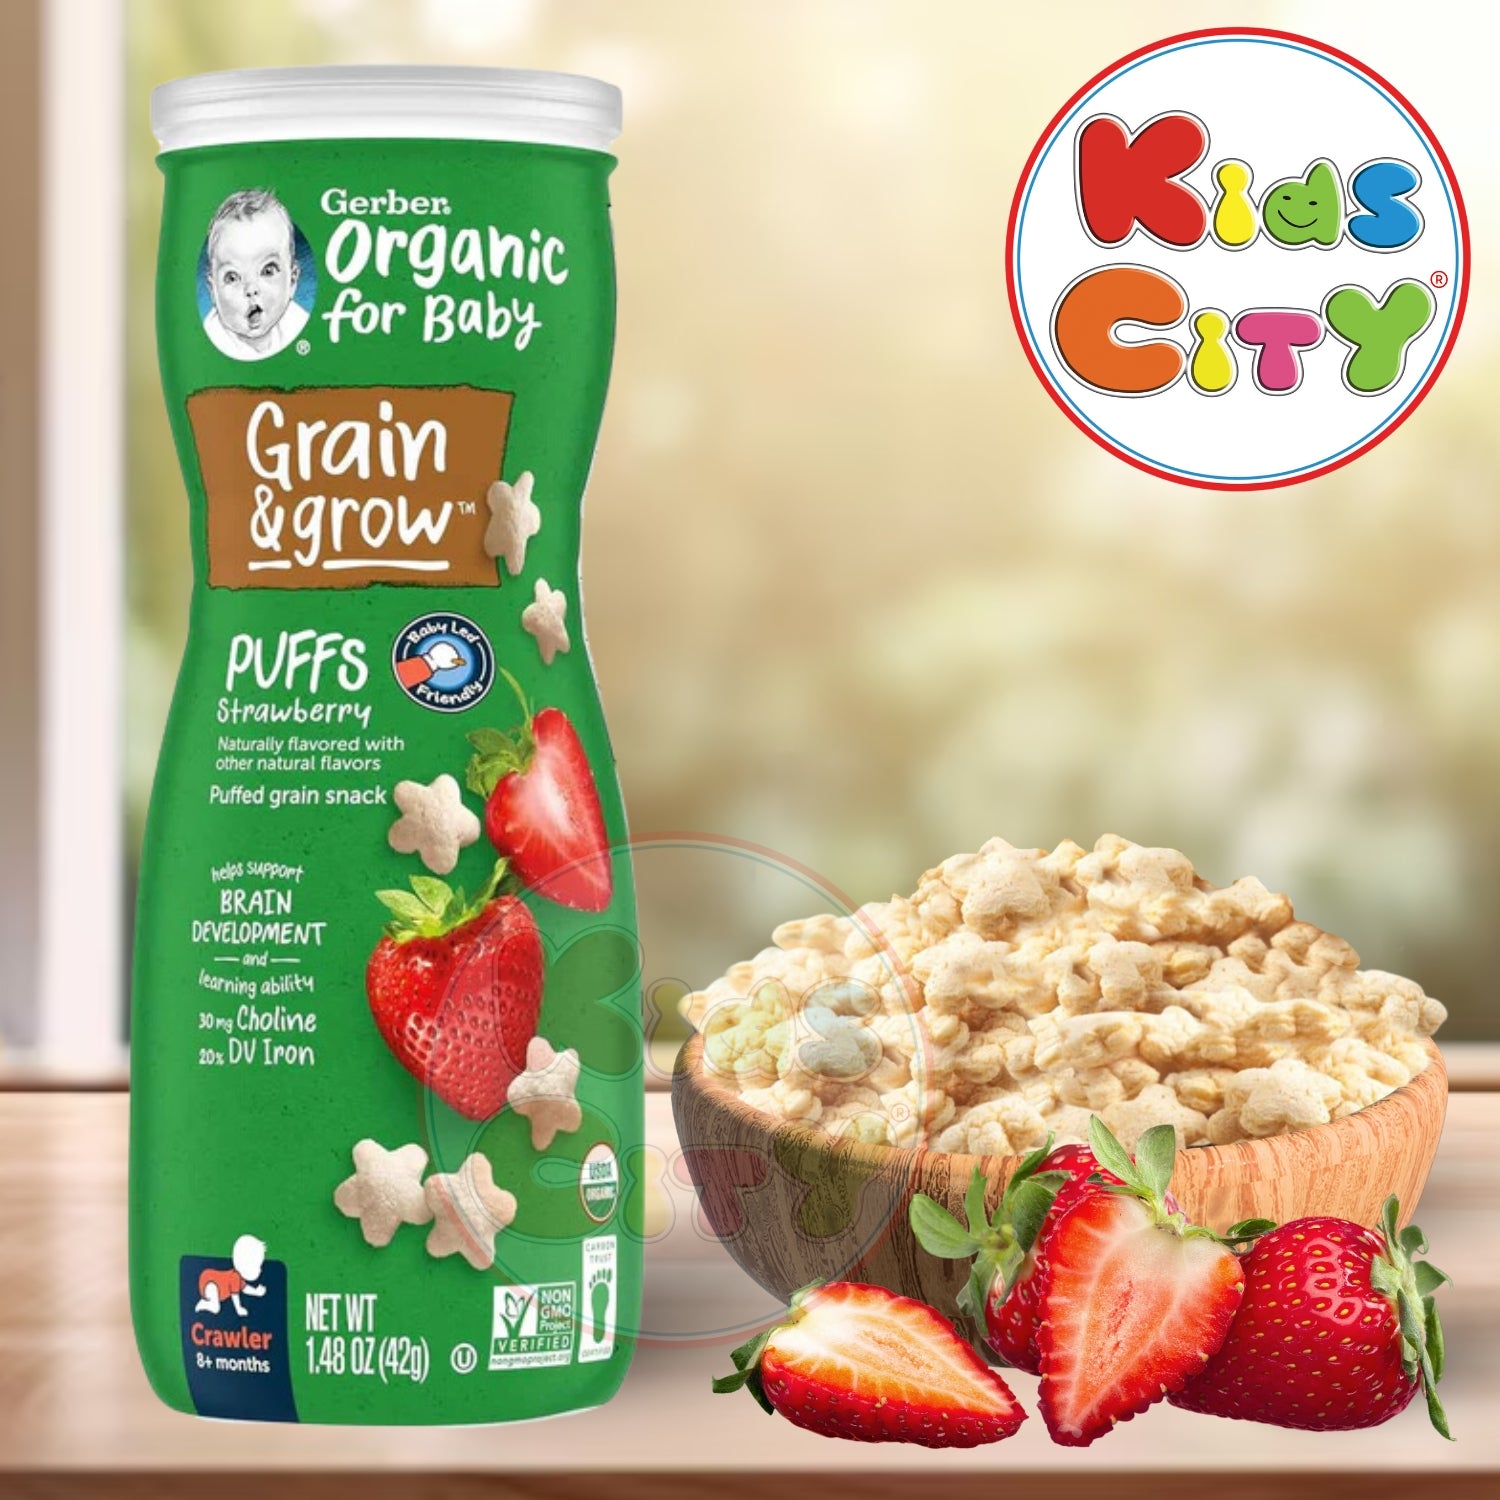 Gerber Organic for Baby, Grow & Grain Puffs for Crawler (1.48oz) - Strawberry